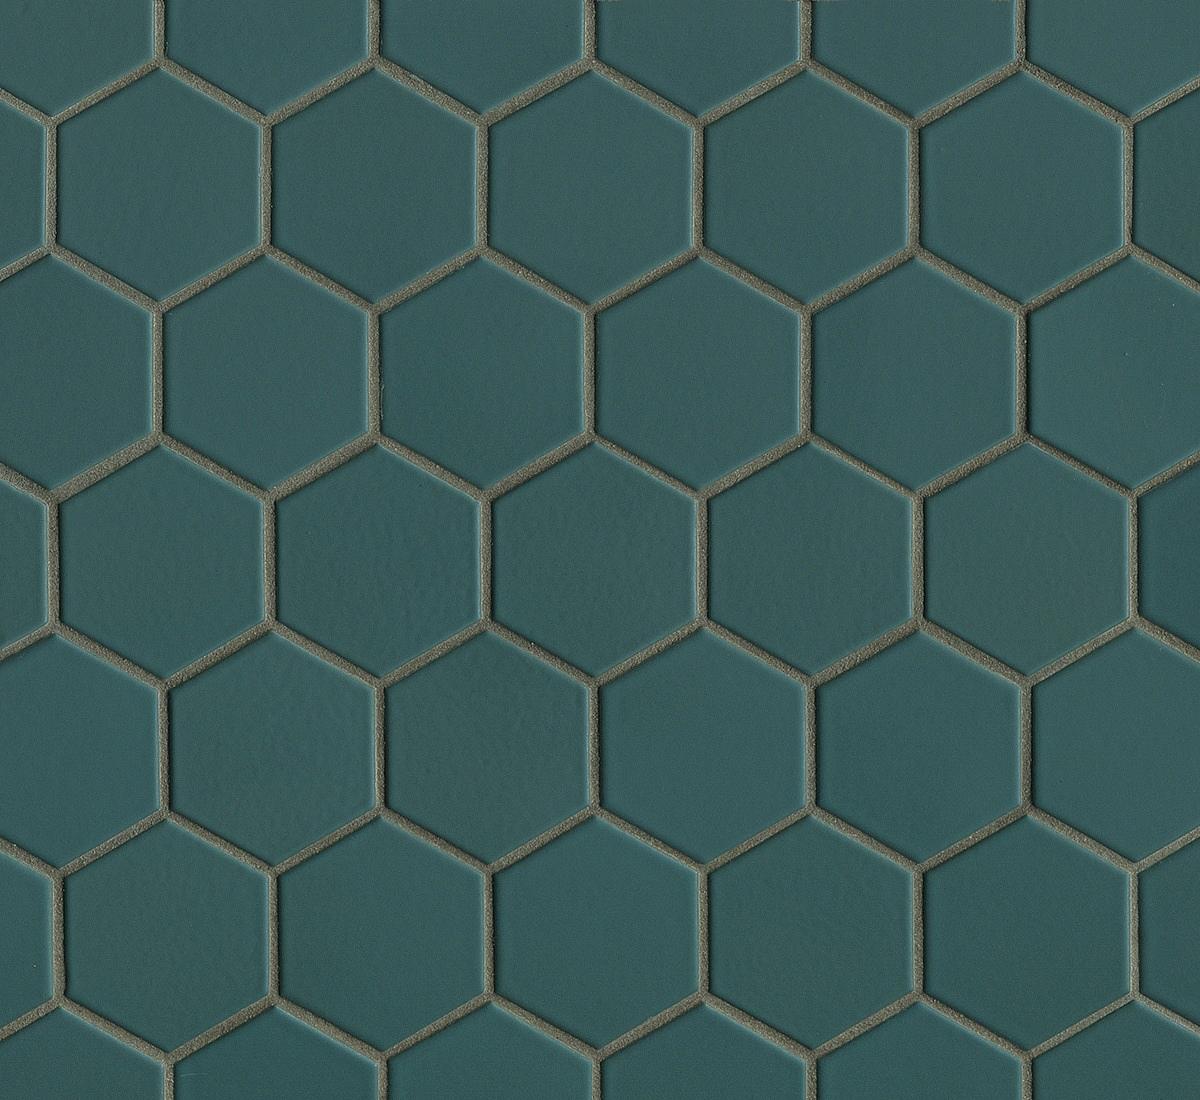 Half Baked Matte Honeycomb Mosaic Tile